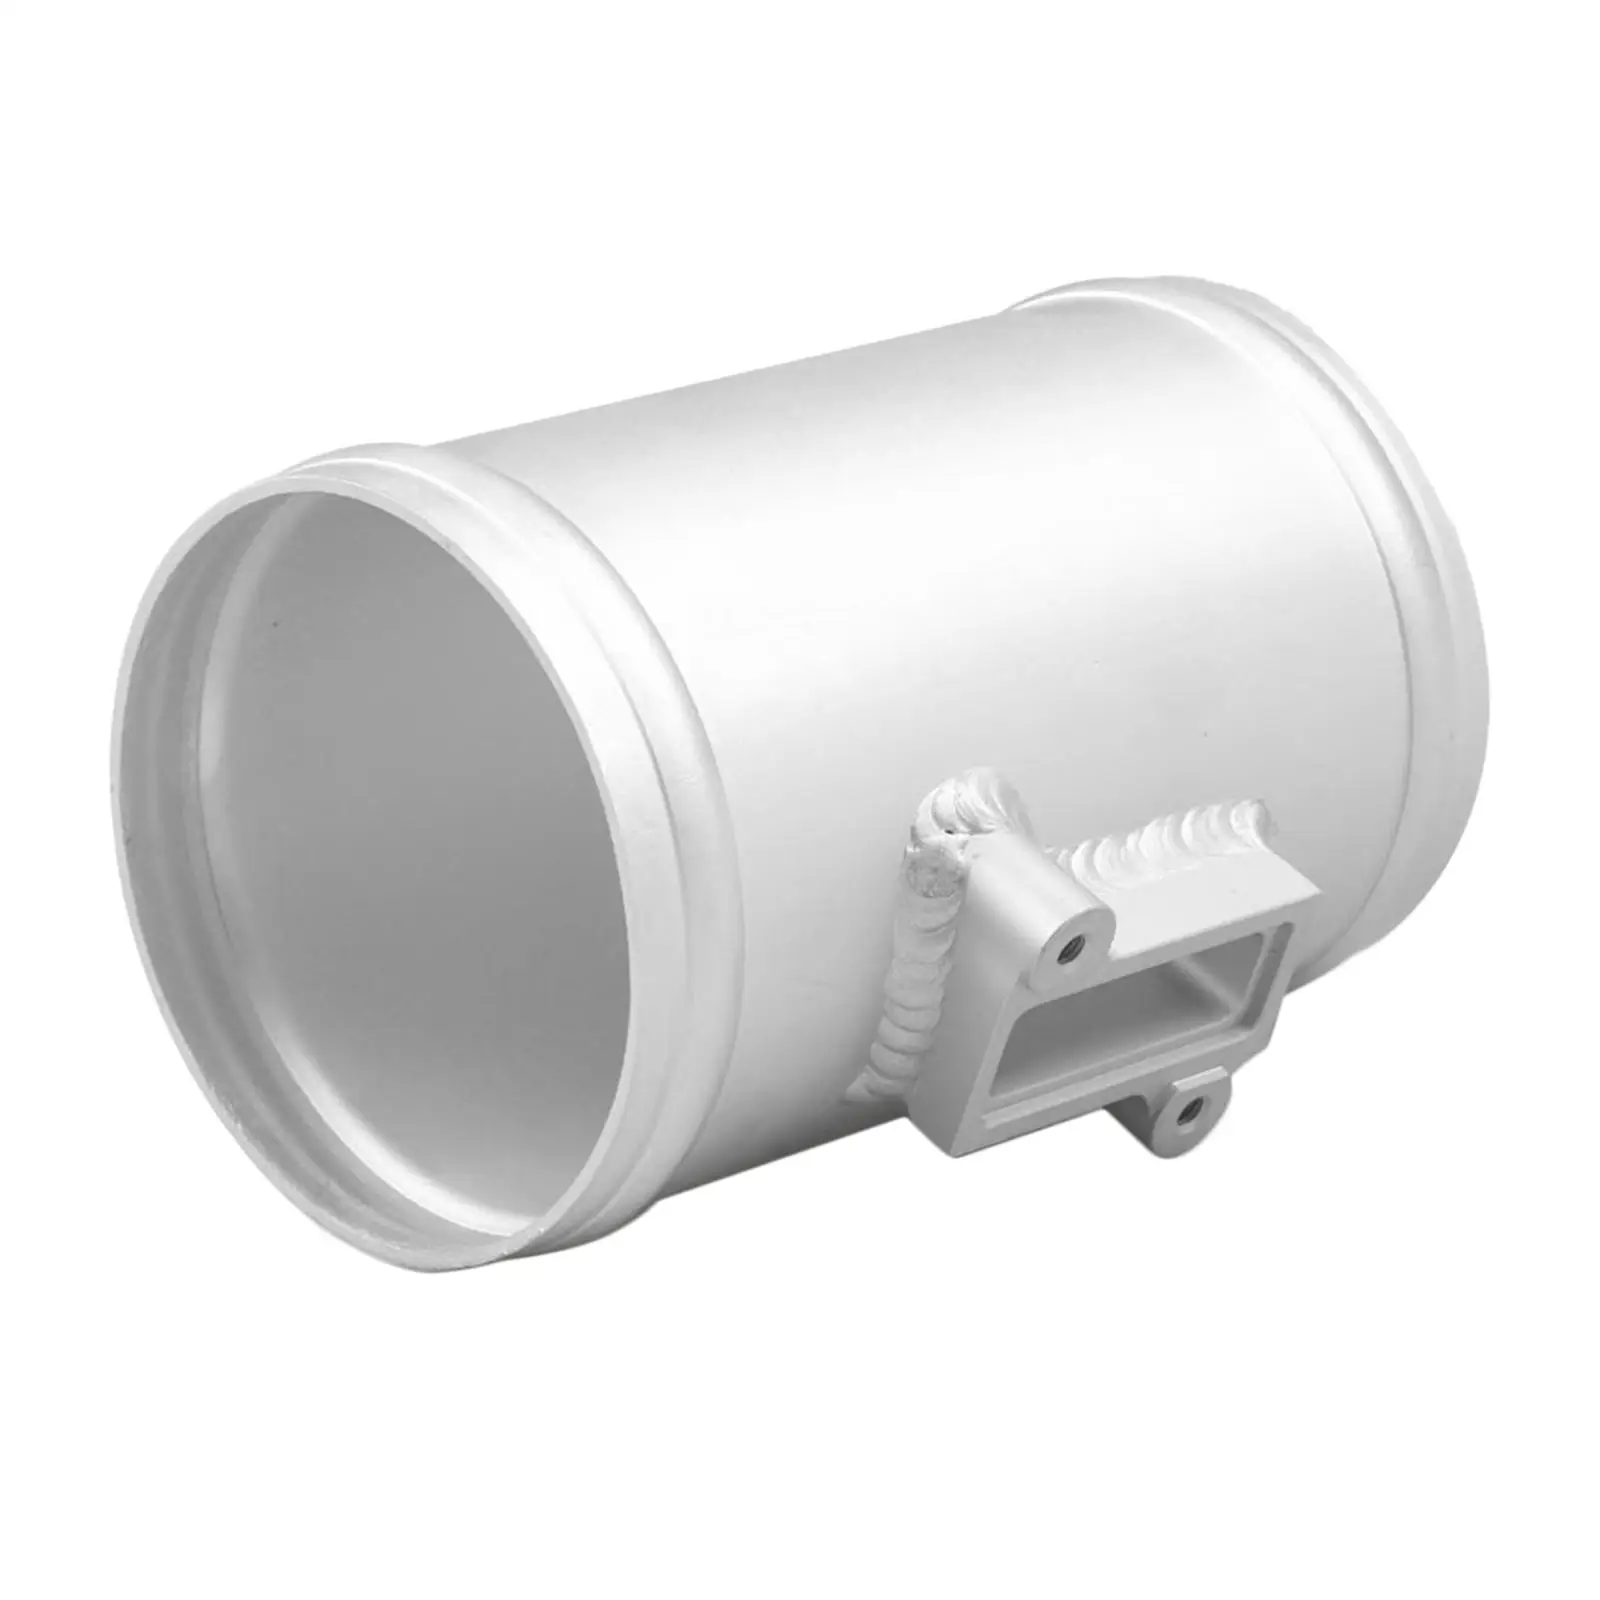 Maf air Flow Sensor Adapter Tube Universal Replacement Air Intake Meter Mount